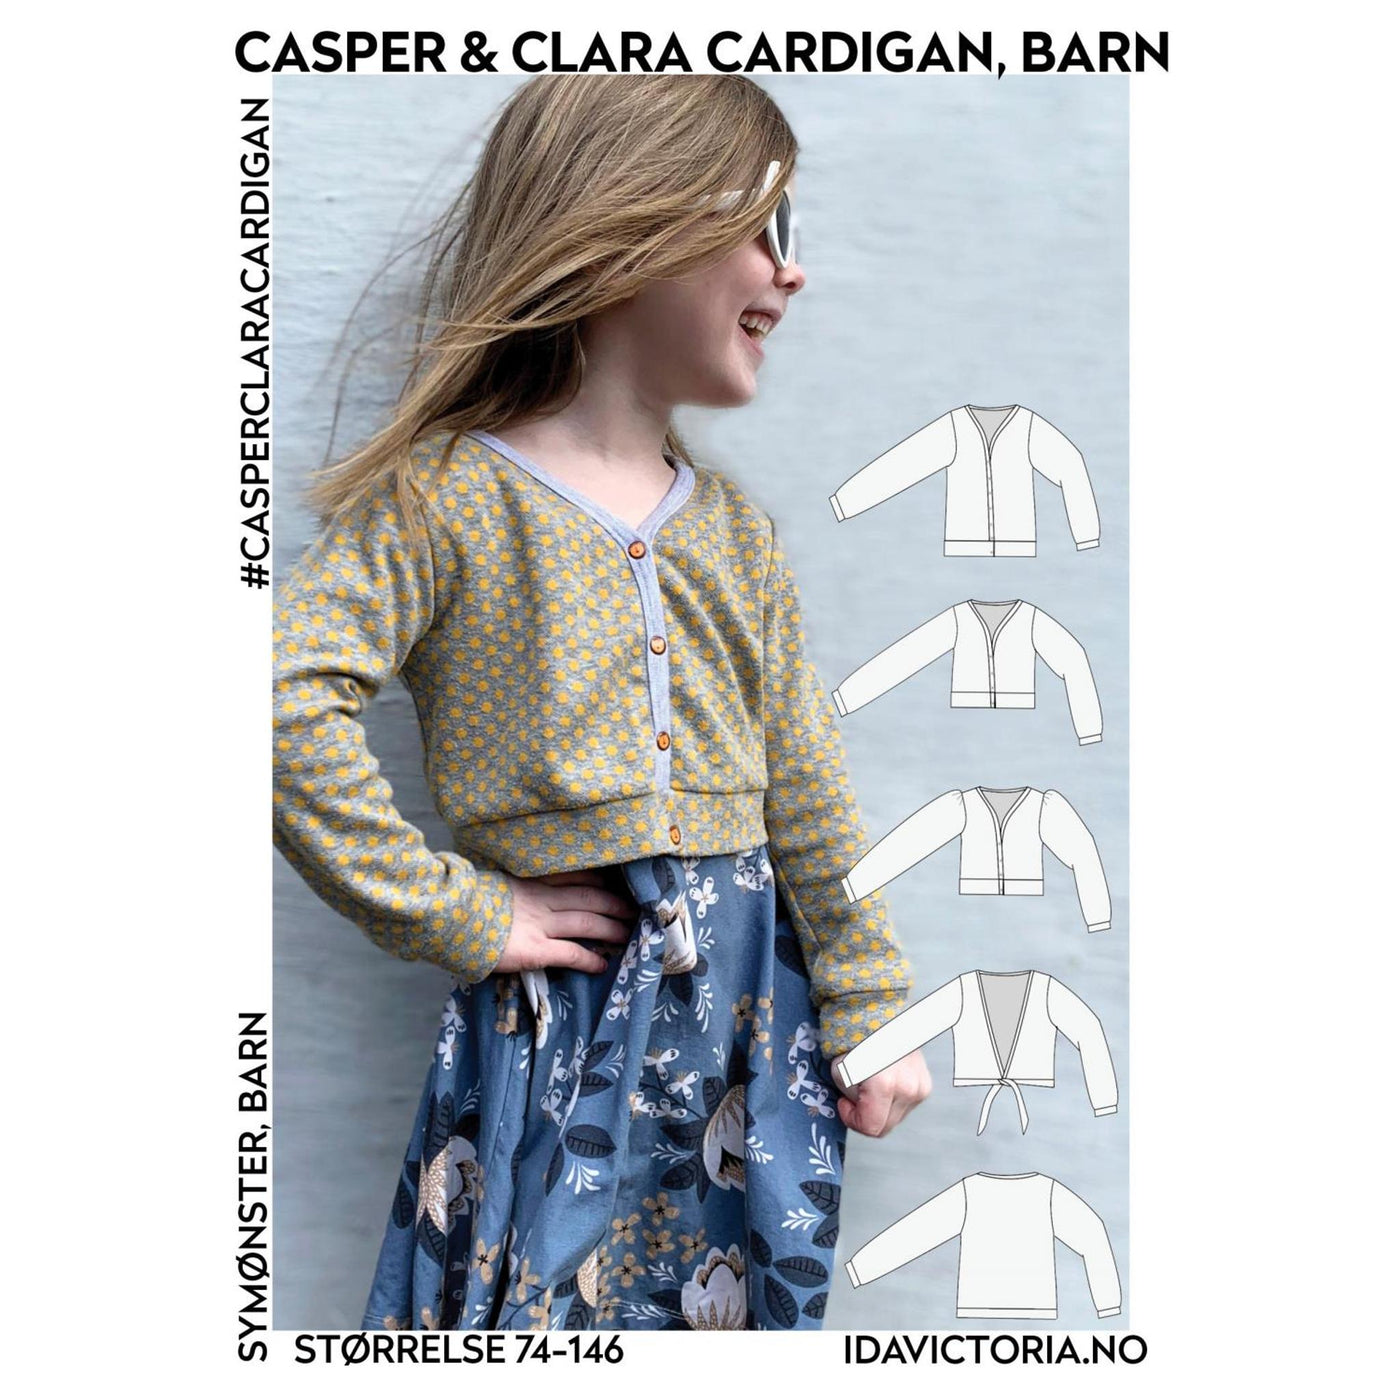 Casper & Clara Cardigan, Barn